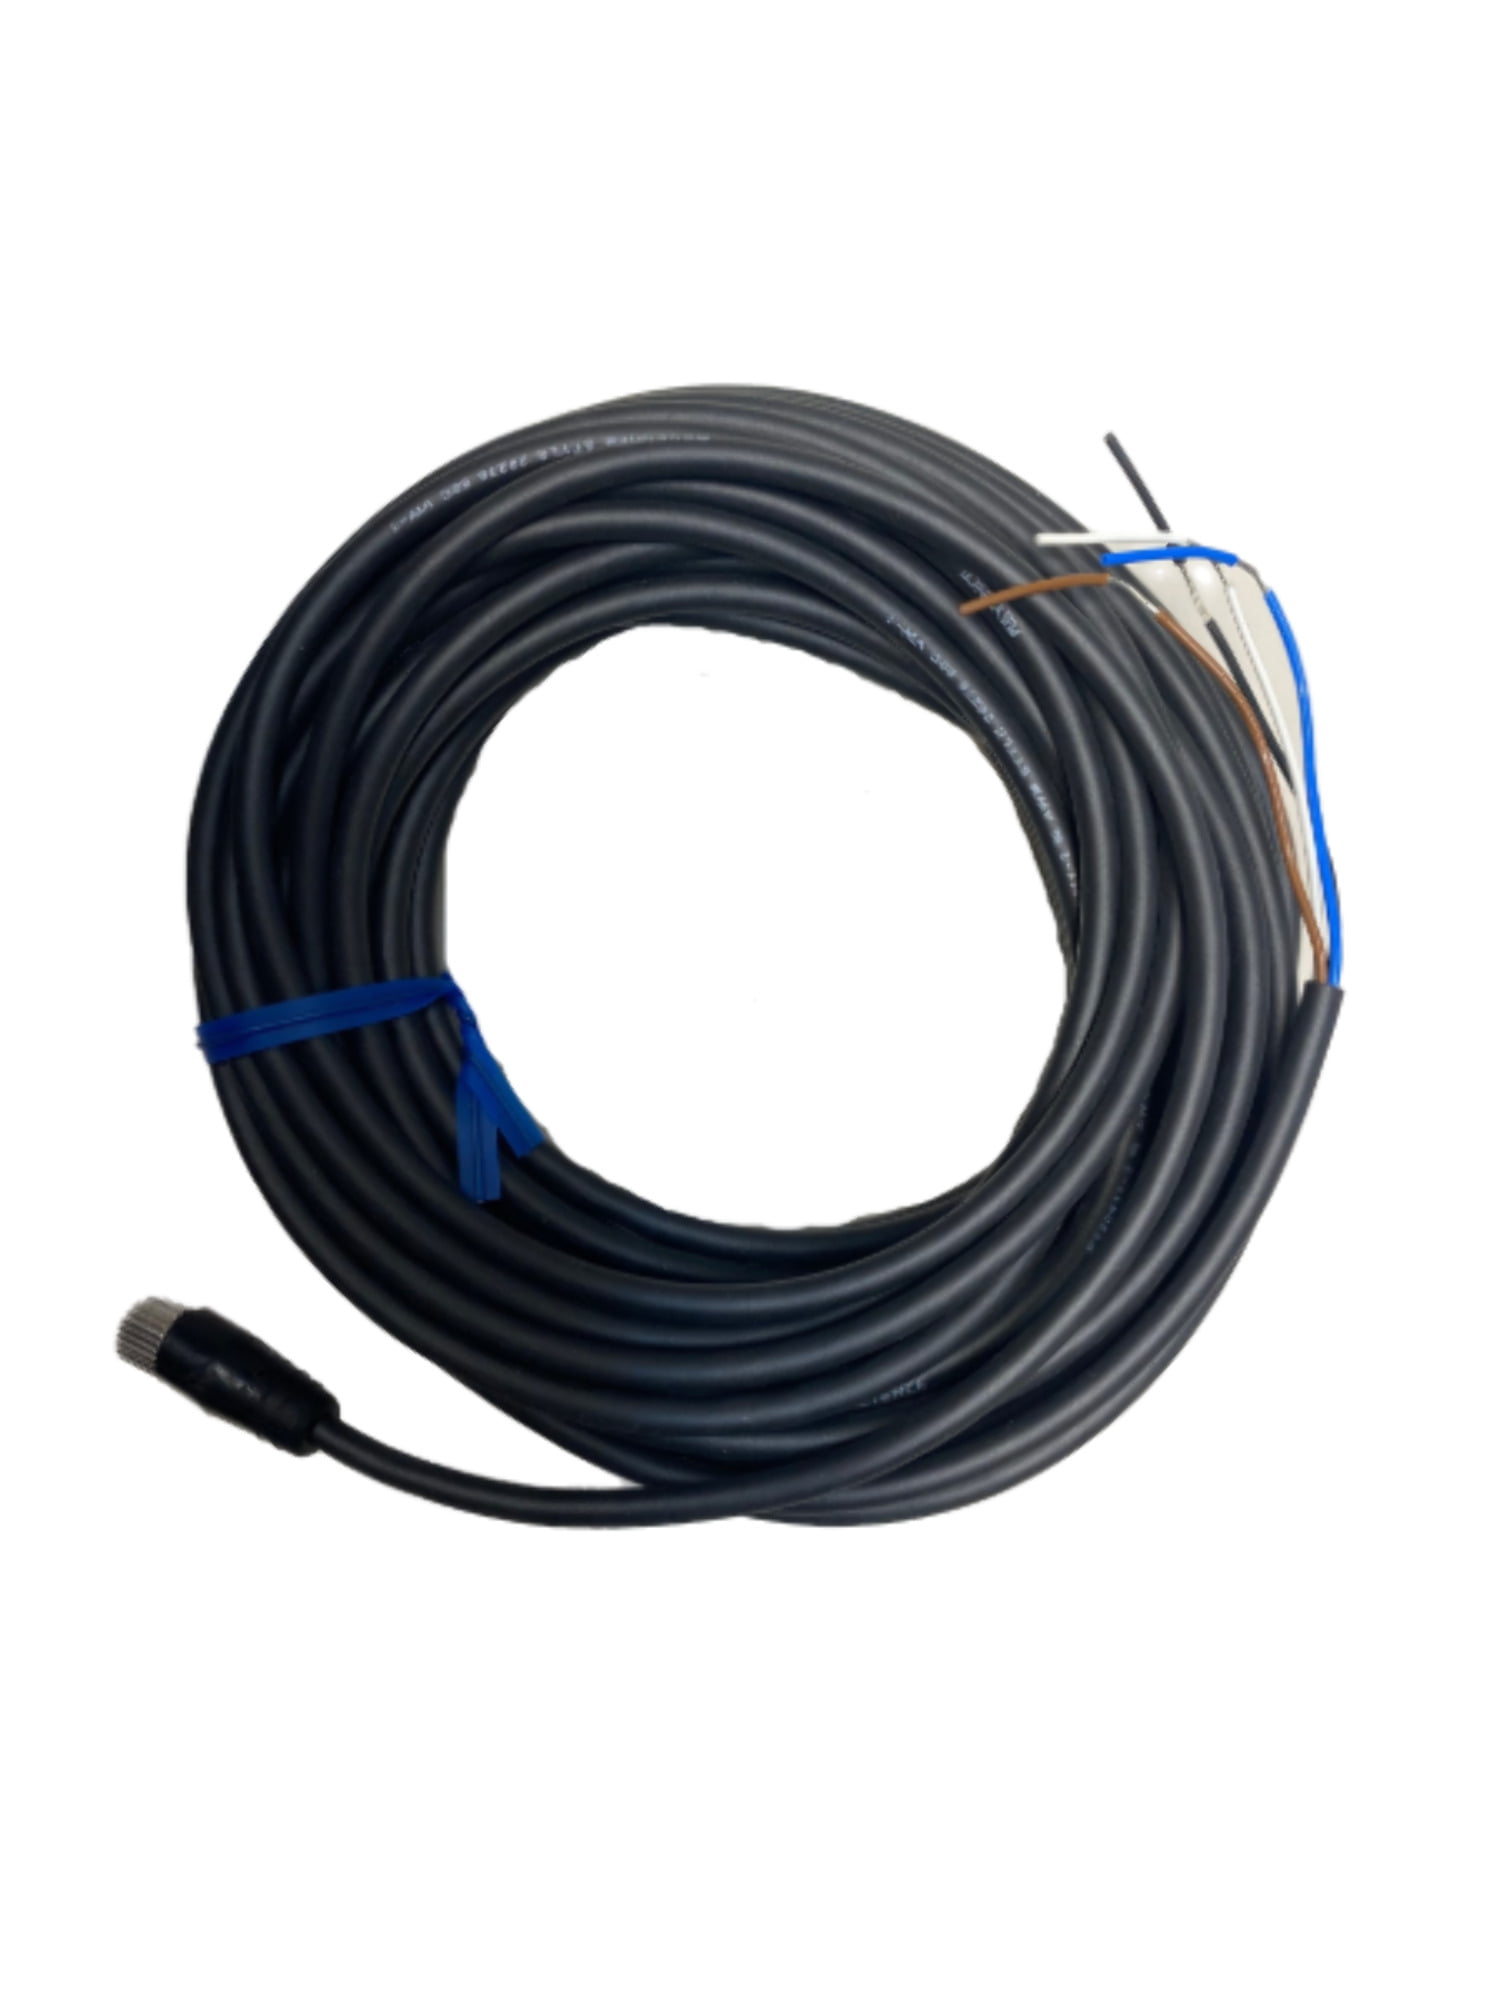 OP-42188 Connector Cable M8 Straight 10-m PVC - Walmart.com